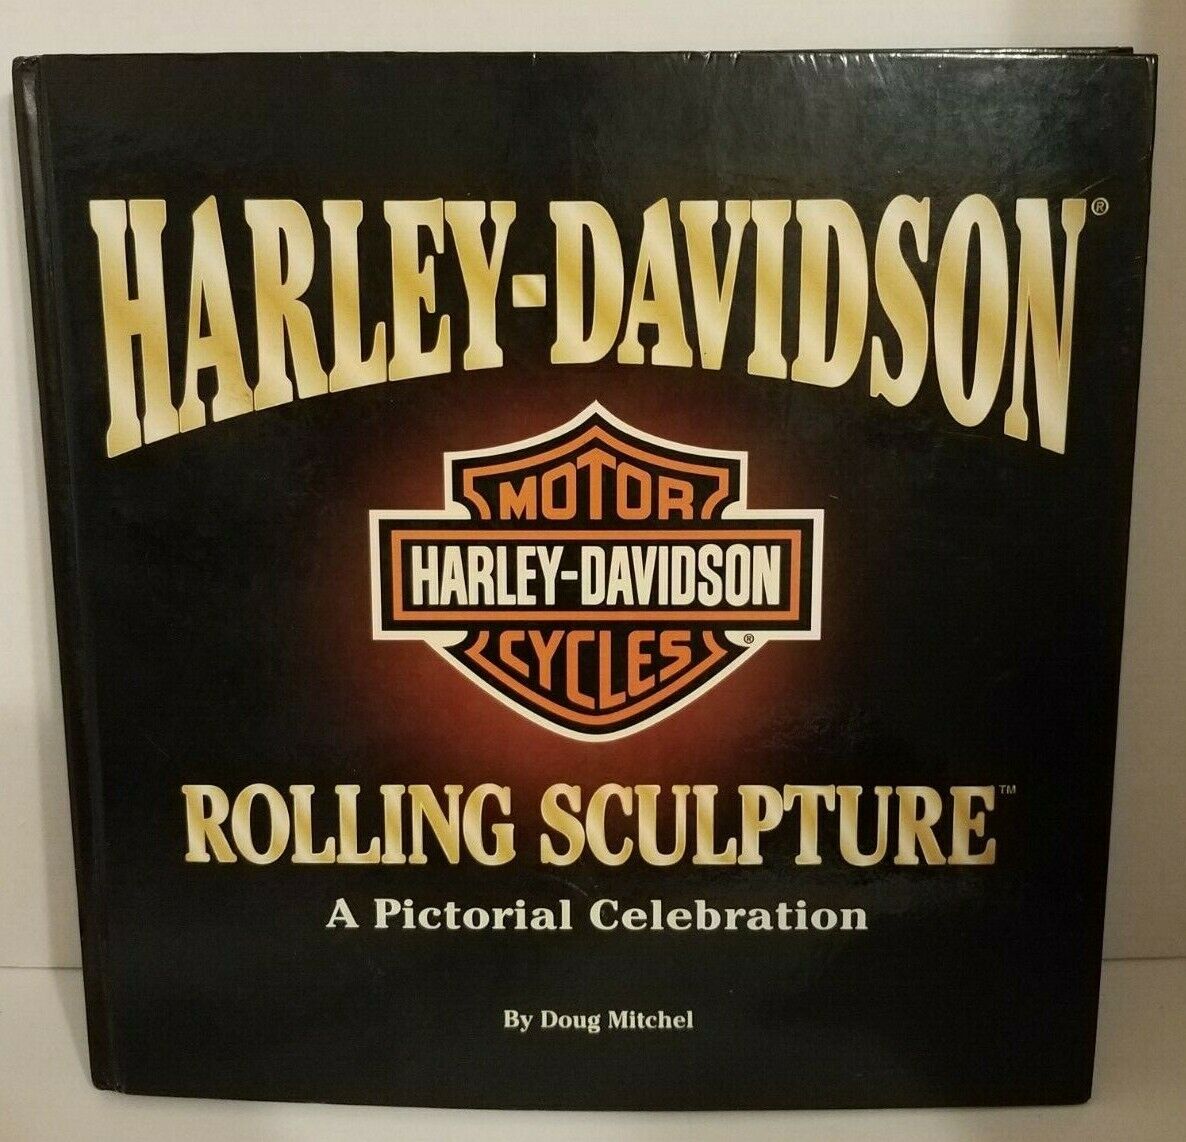 Harley Davidson : Rolling Sculpture, Harley-Davidson Motor Cycles 2002